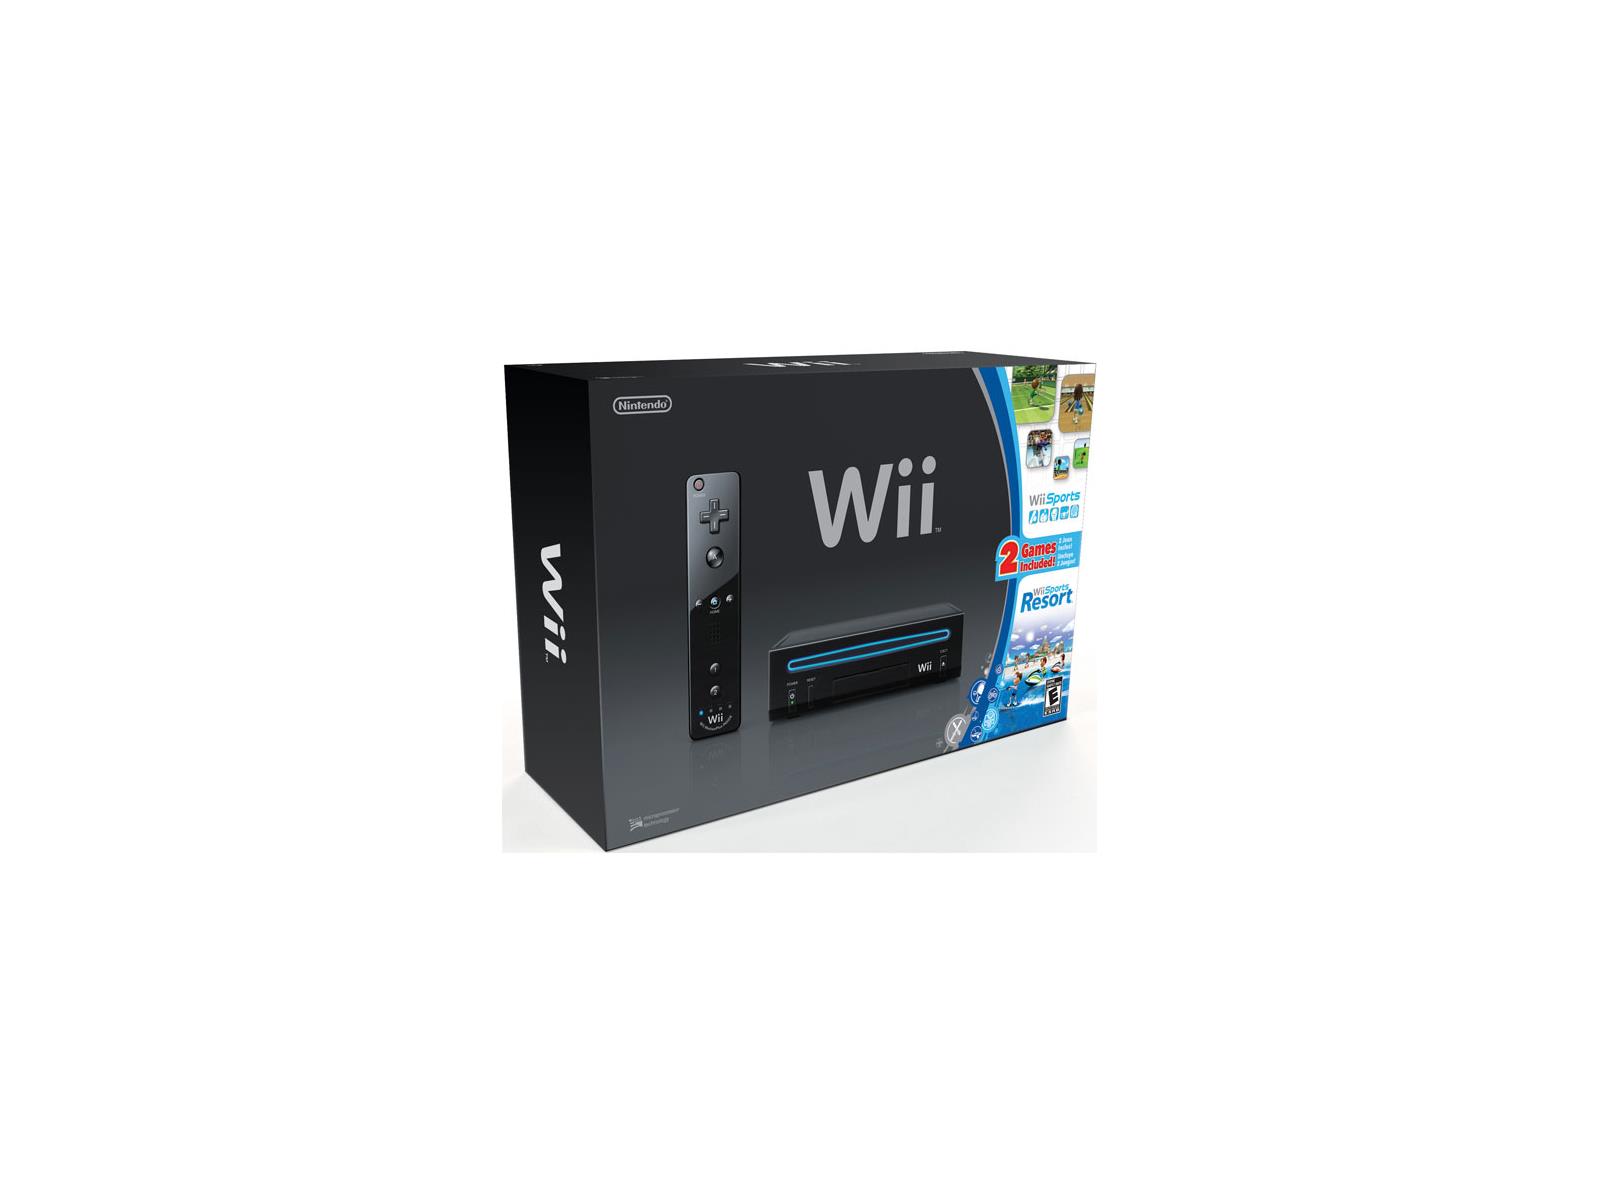 Nintendo Wii Bundle Drops to $130 Ahead of Wii U Launch, Includes